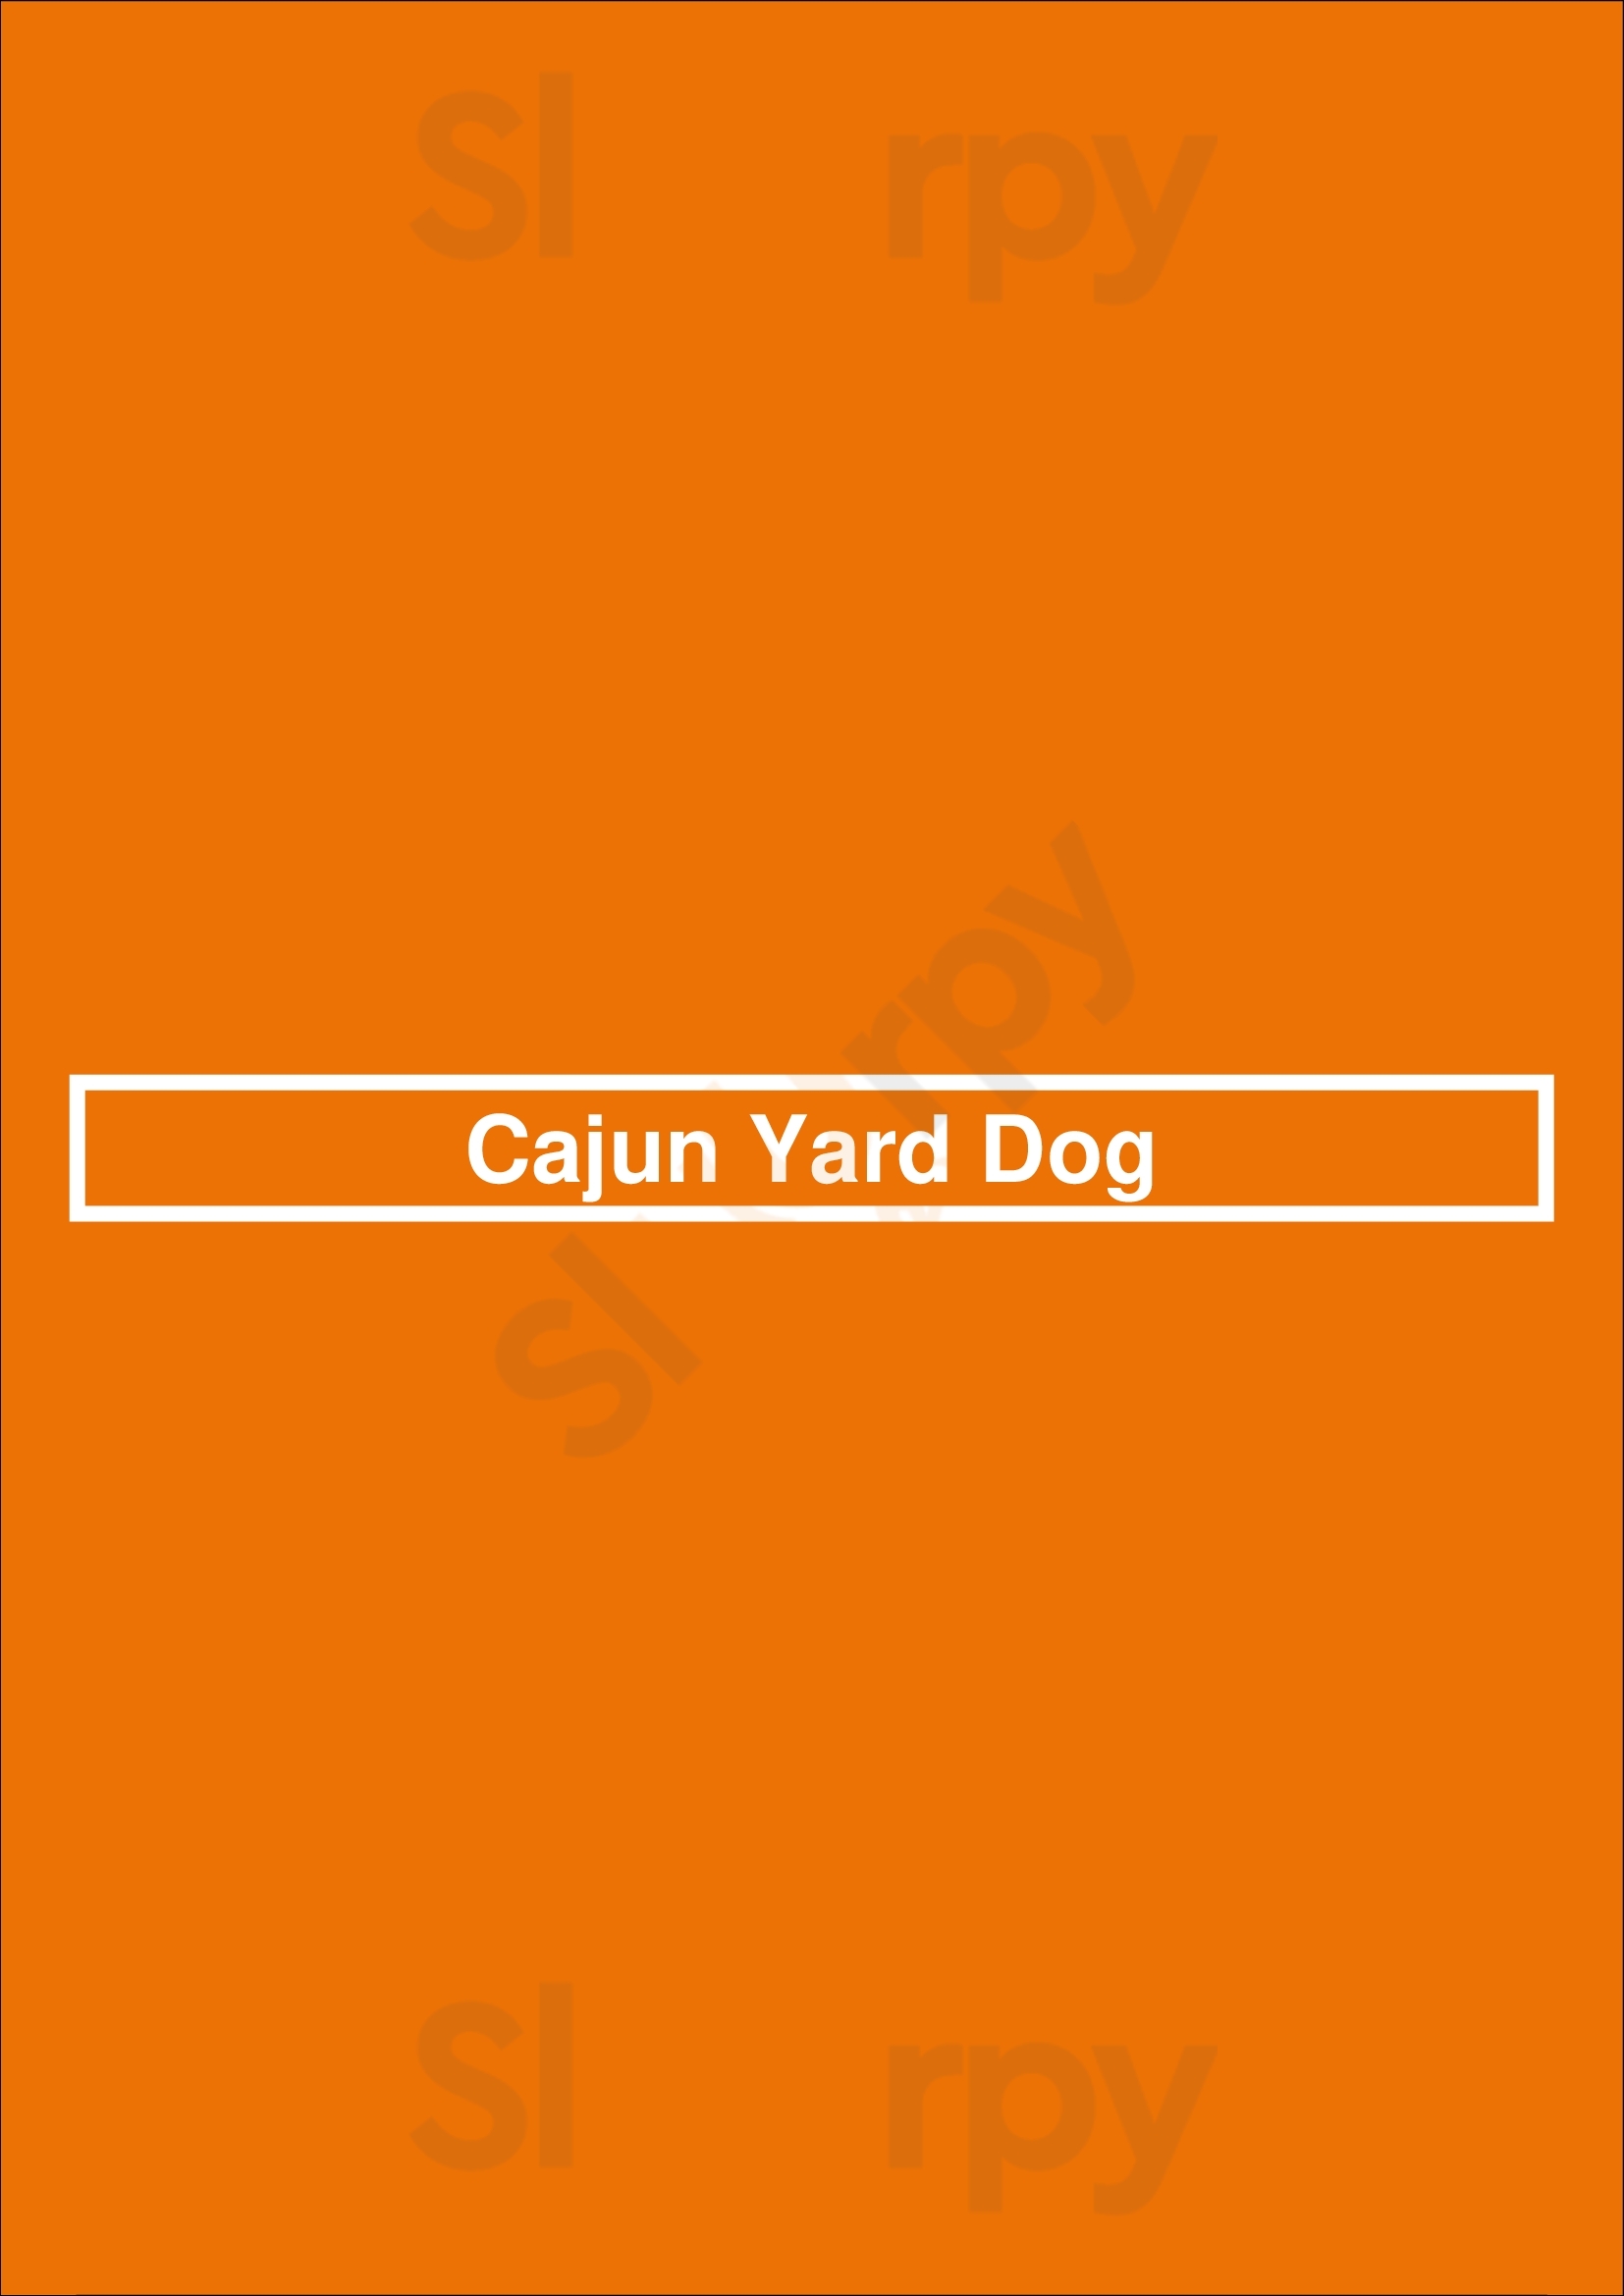 Cajun Yard Dog Charlotte Menu - 1